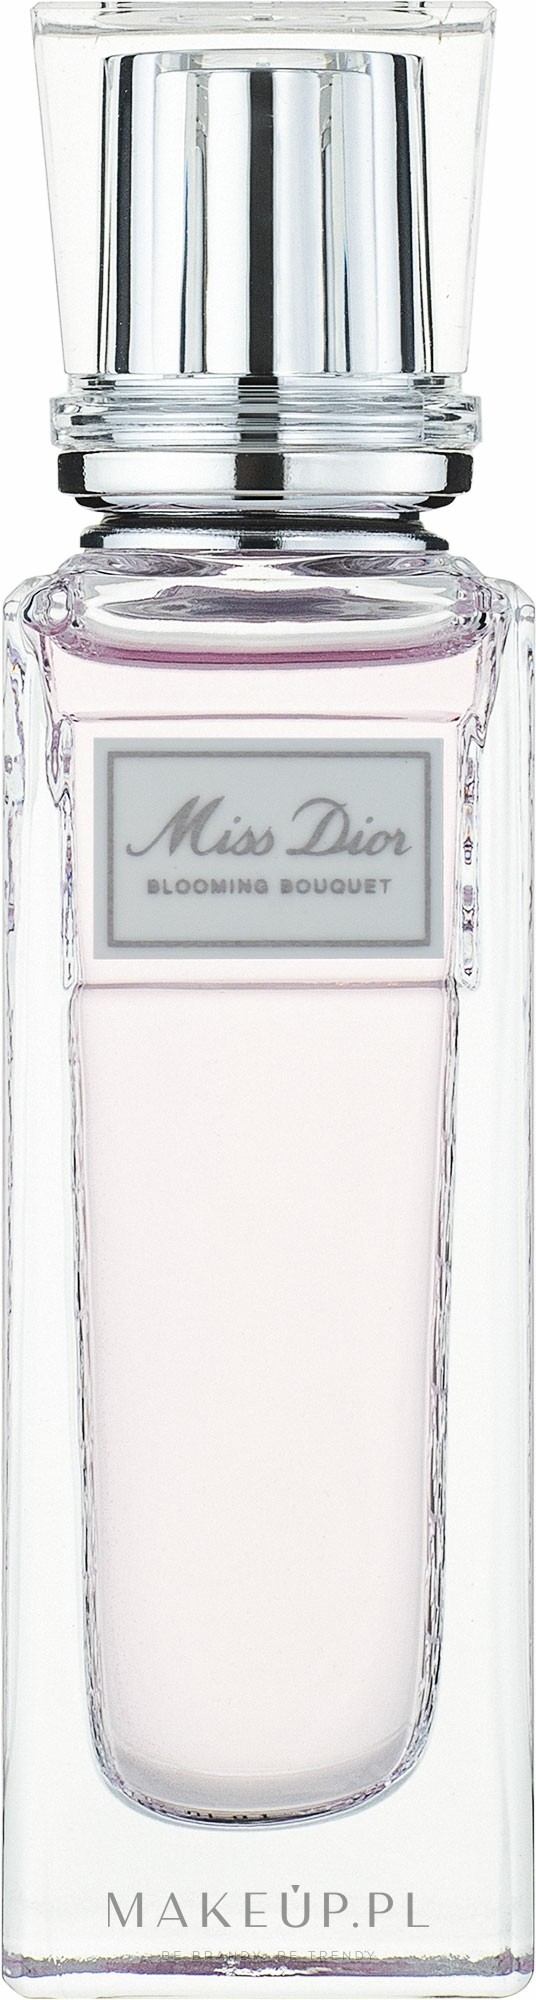 Christian Dior Miss Dior Blooming Bouquet 2014 woda toaletowa 30ml   Ceneopl